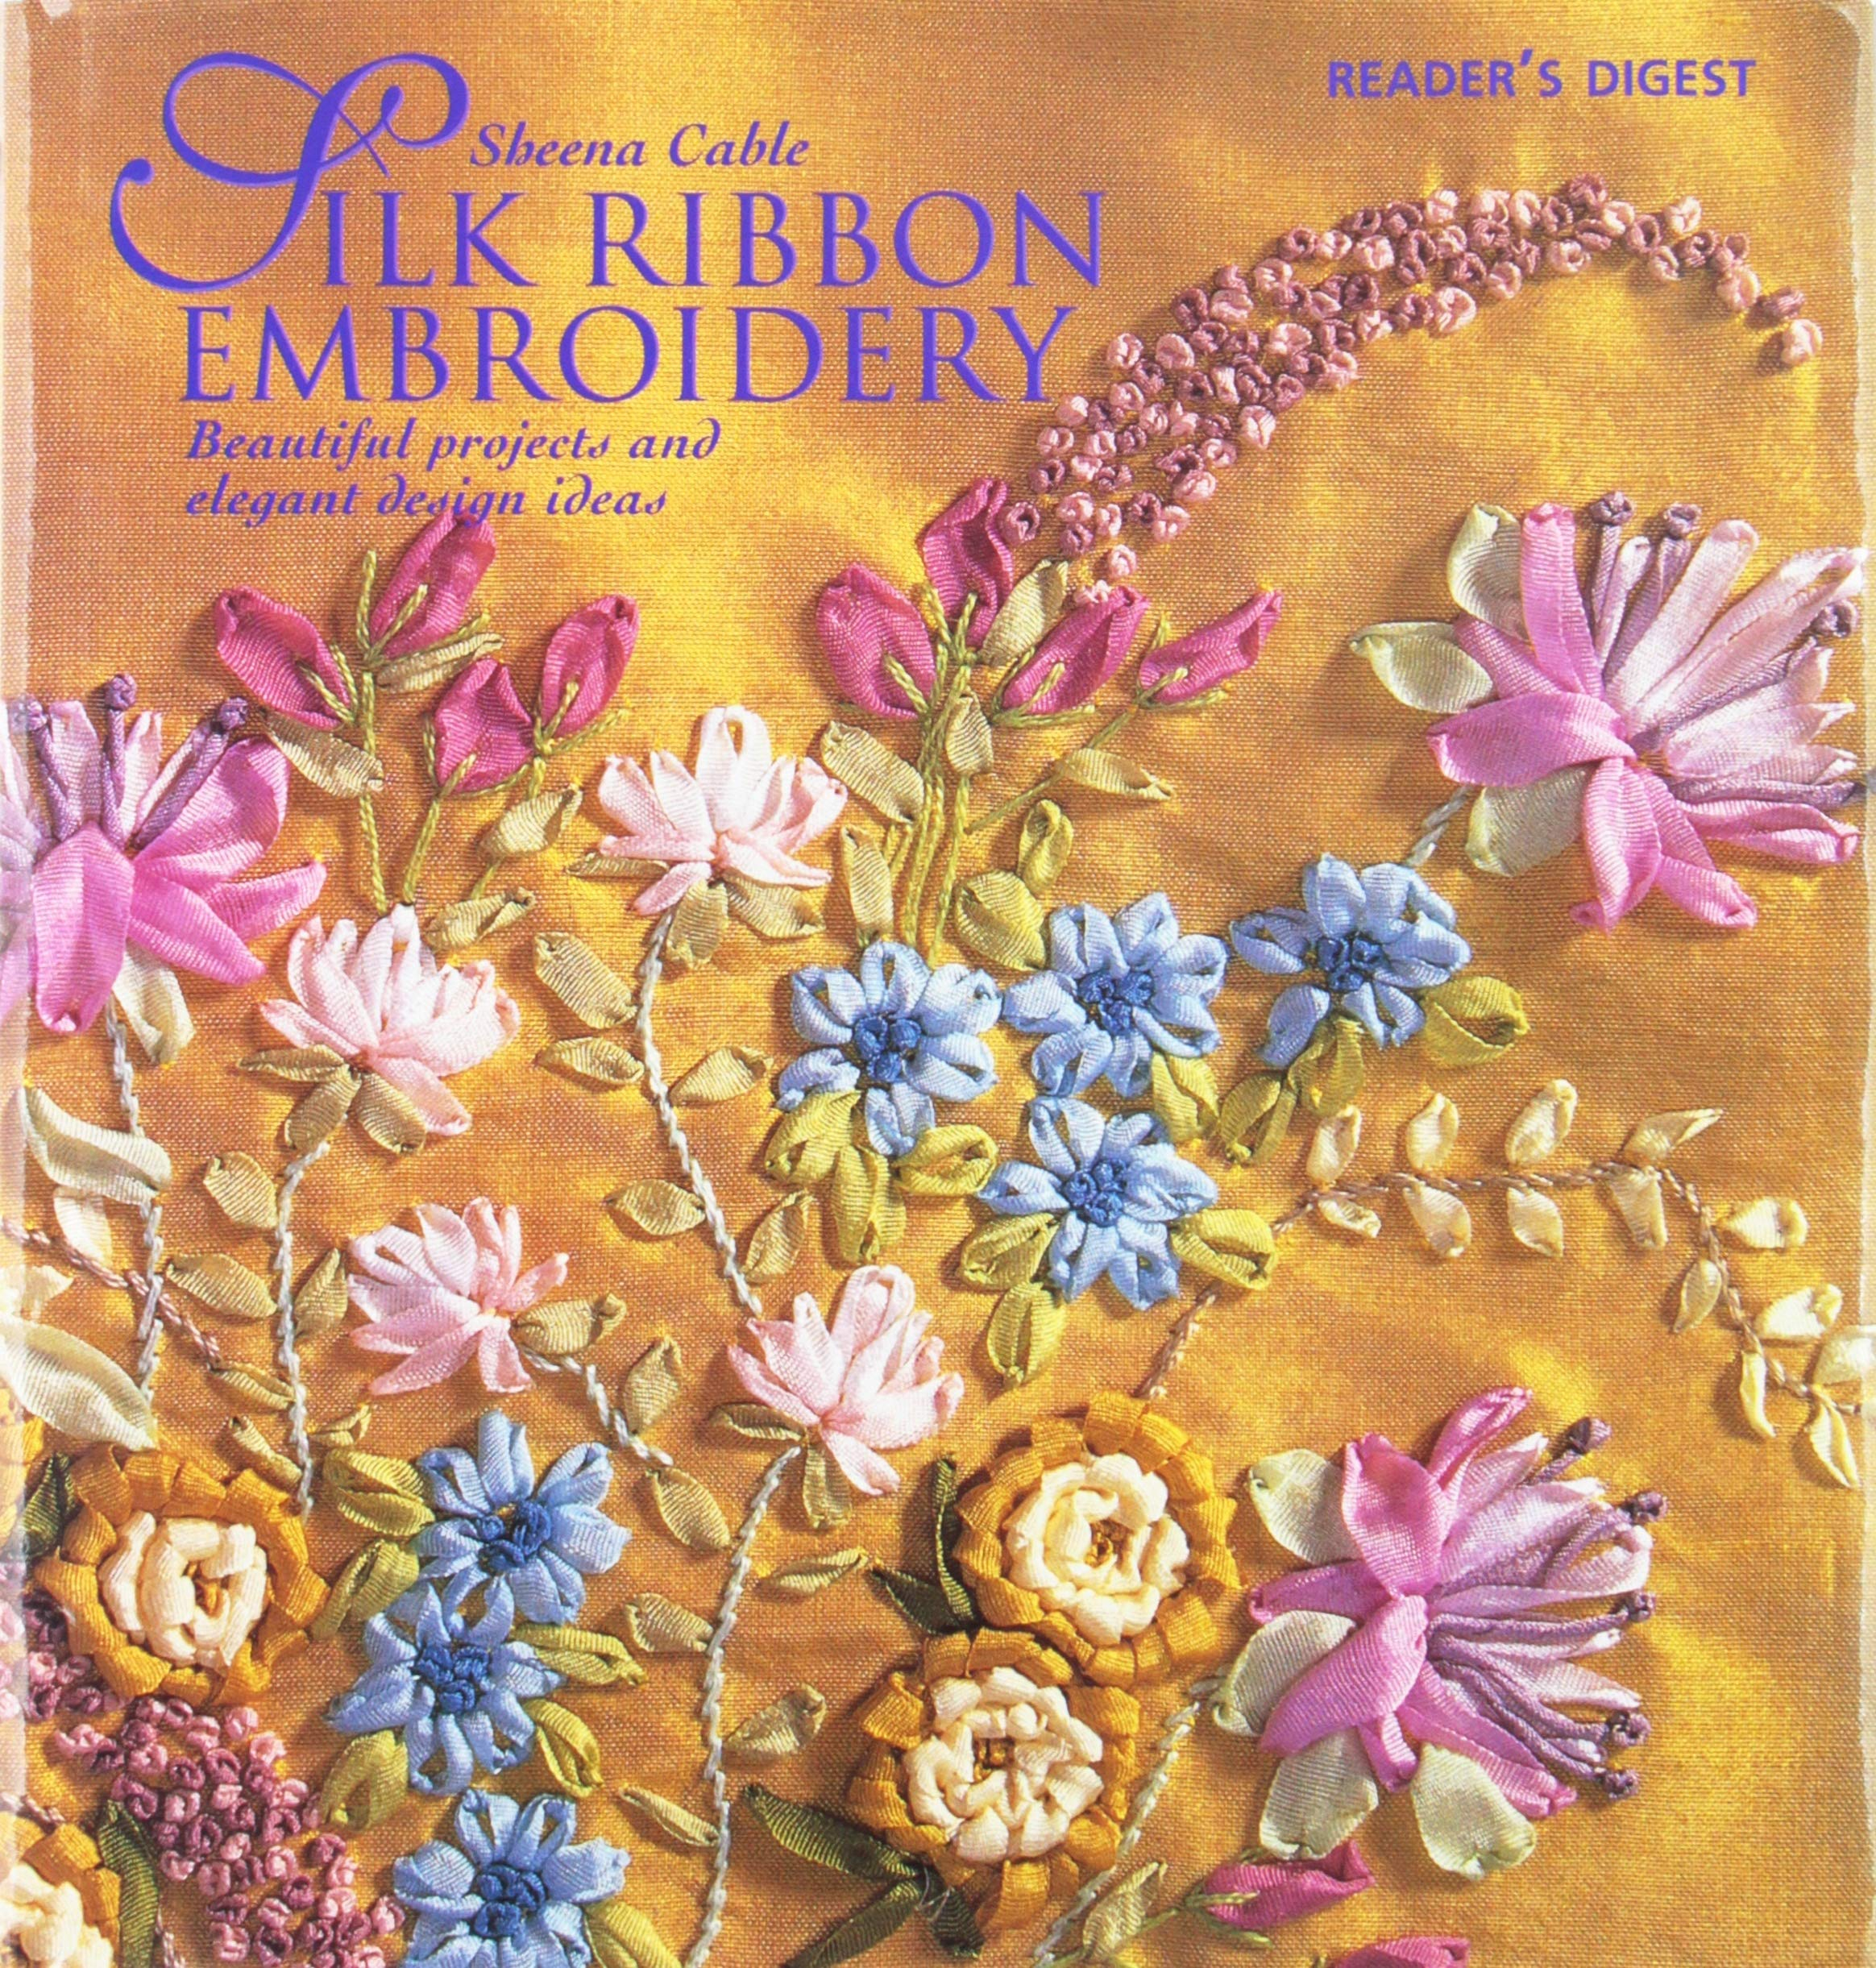 Ribbon Embroidery Patterns Free Small Embroidery Patterns New Patterns